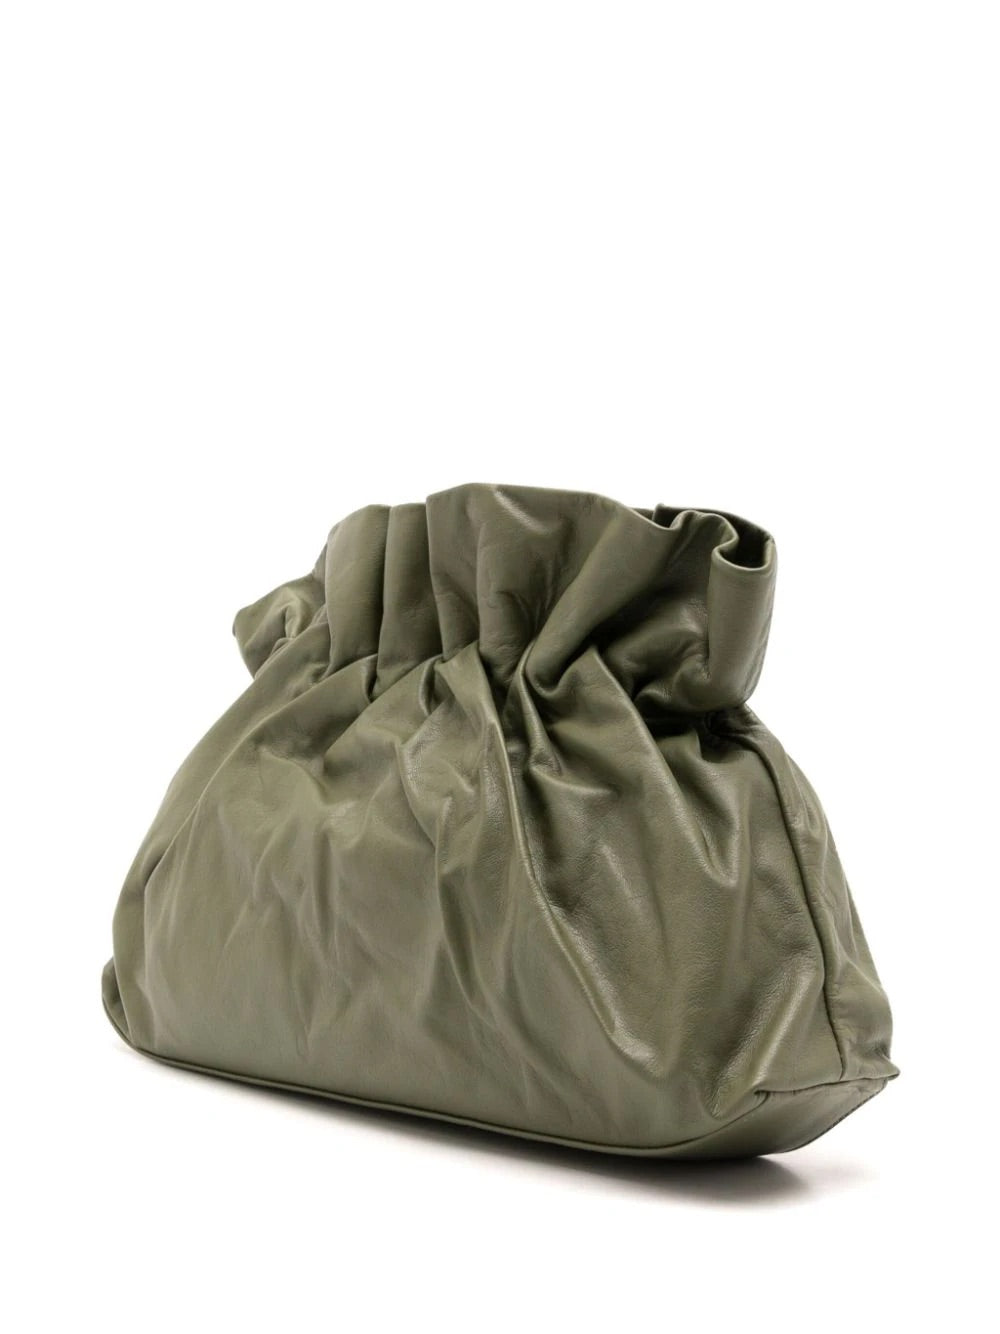 Shell Clutch Bag Dark Green 2